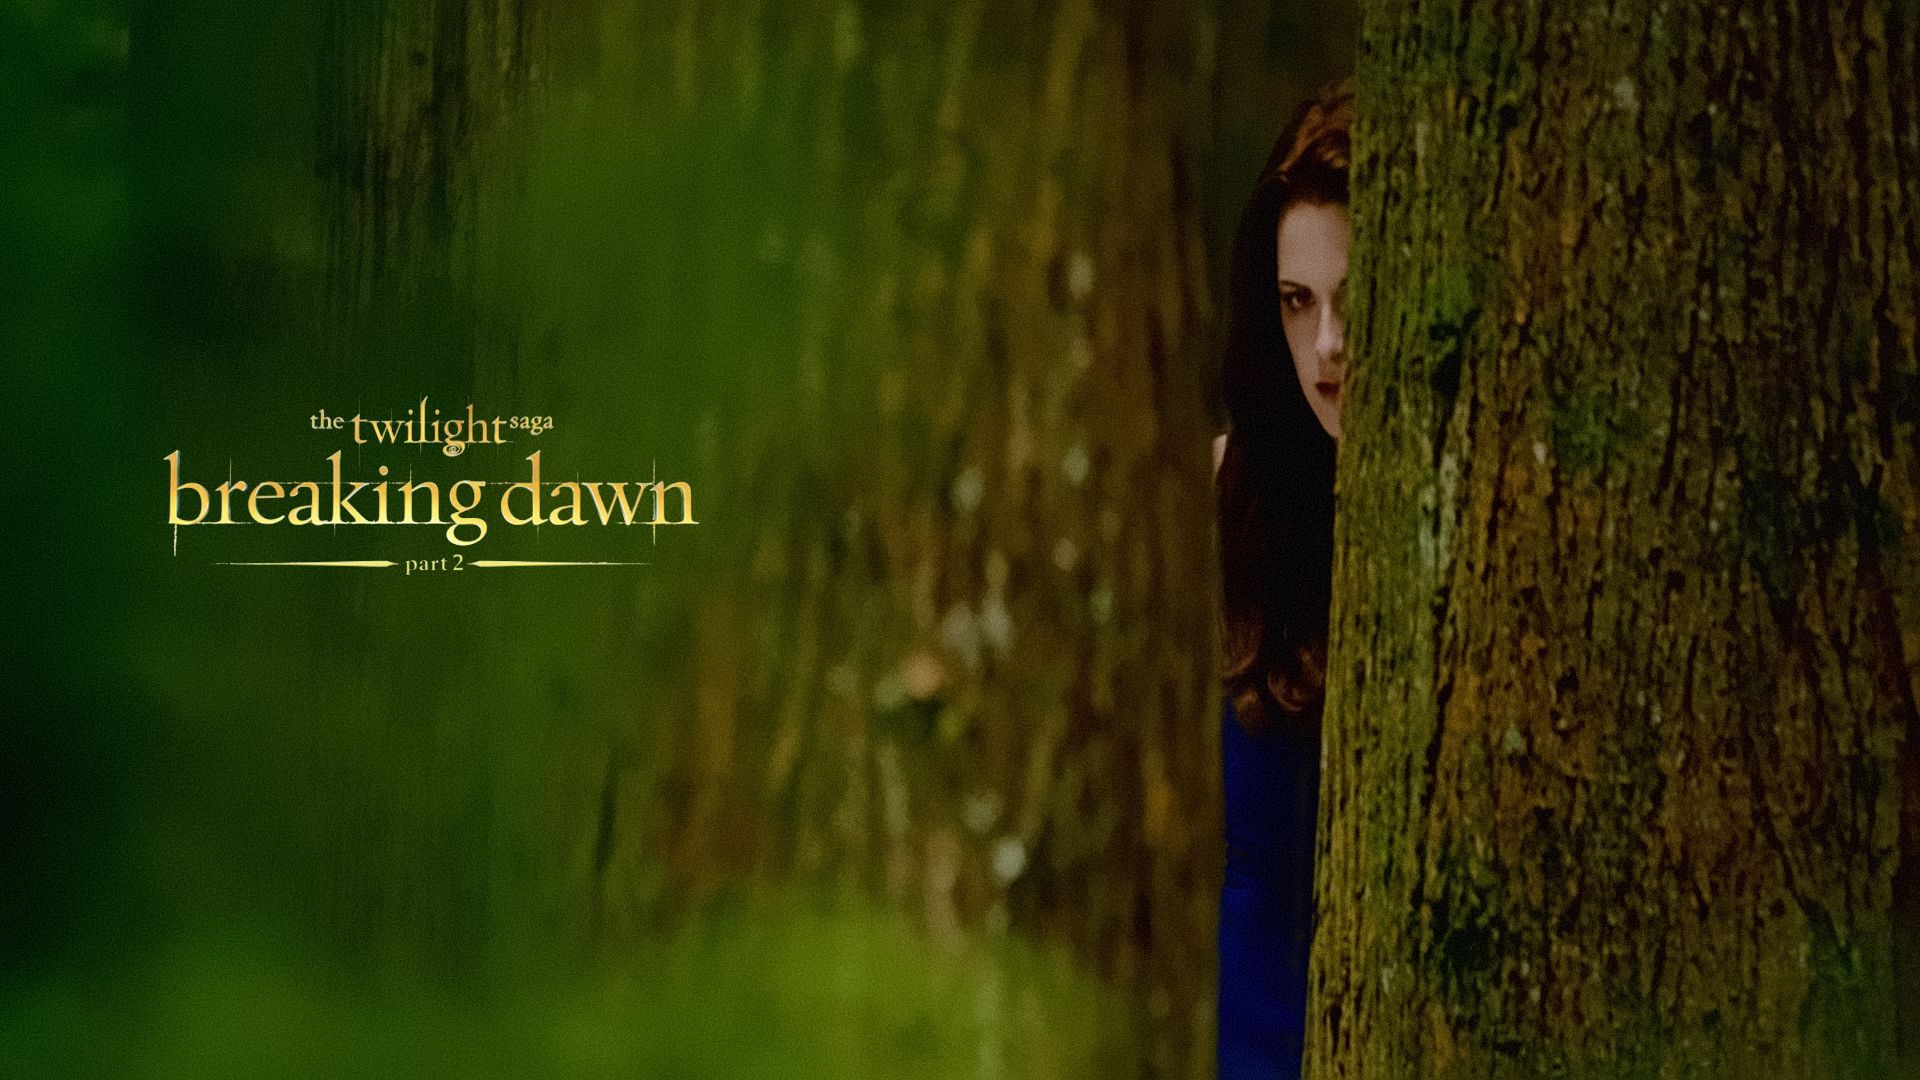 Breaking Dawn Part 2 wallpapers - Twilight Series Wallpaper ...